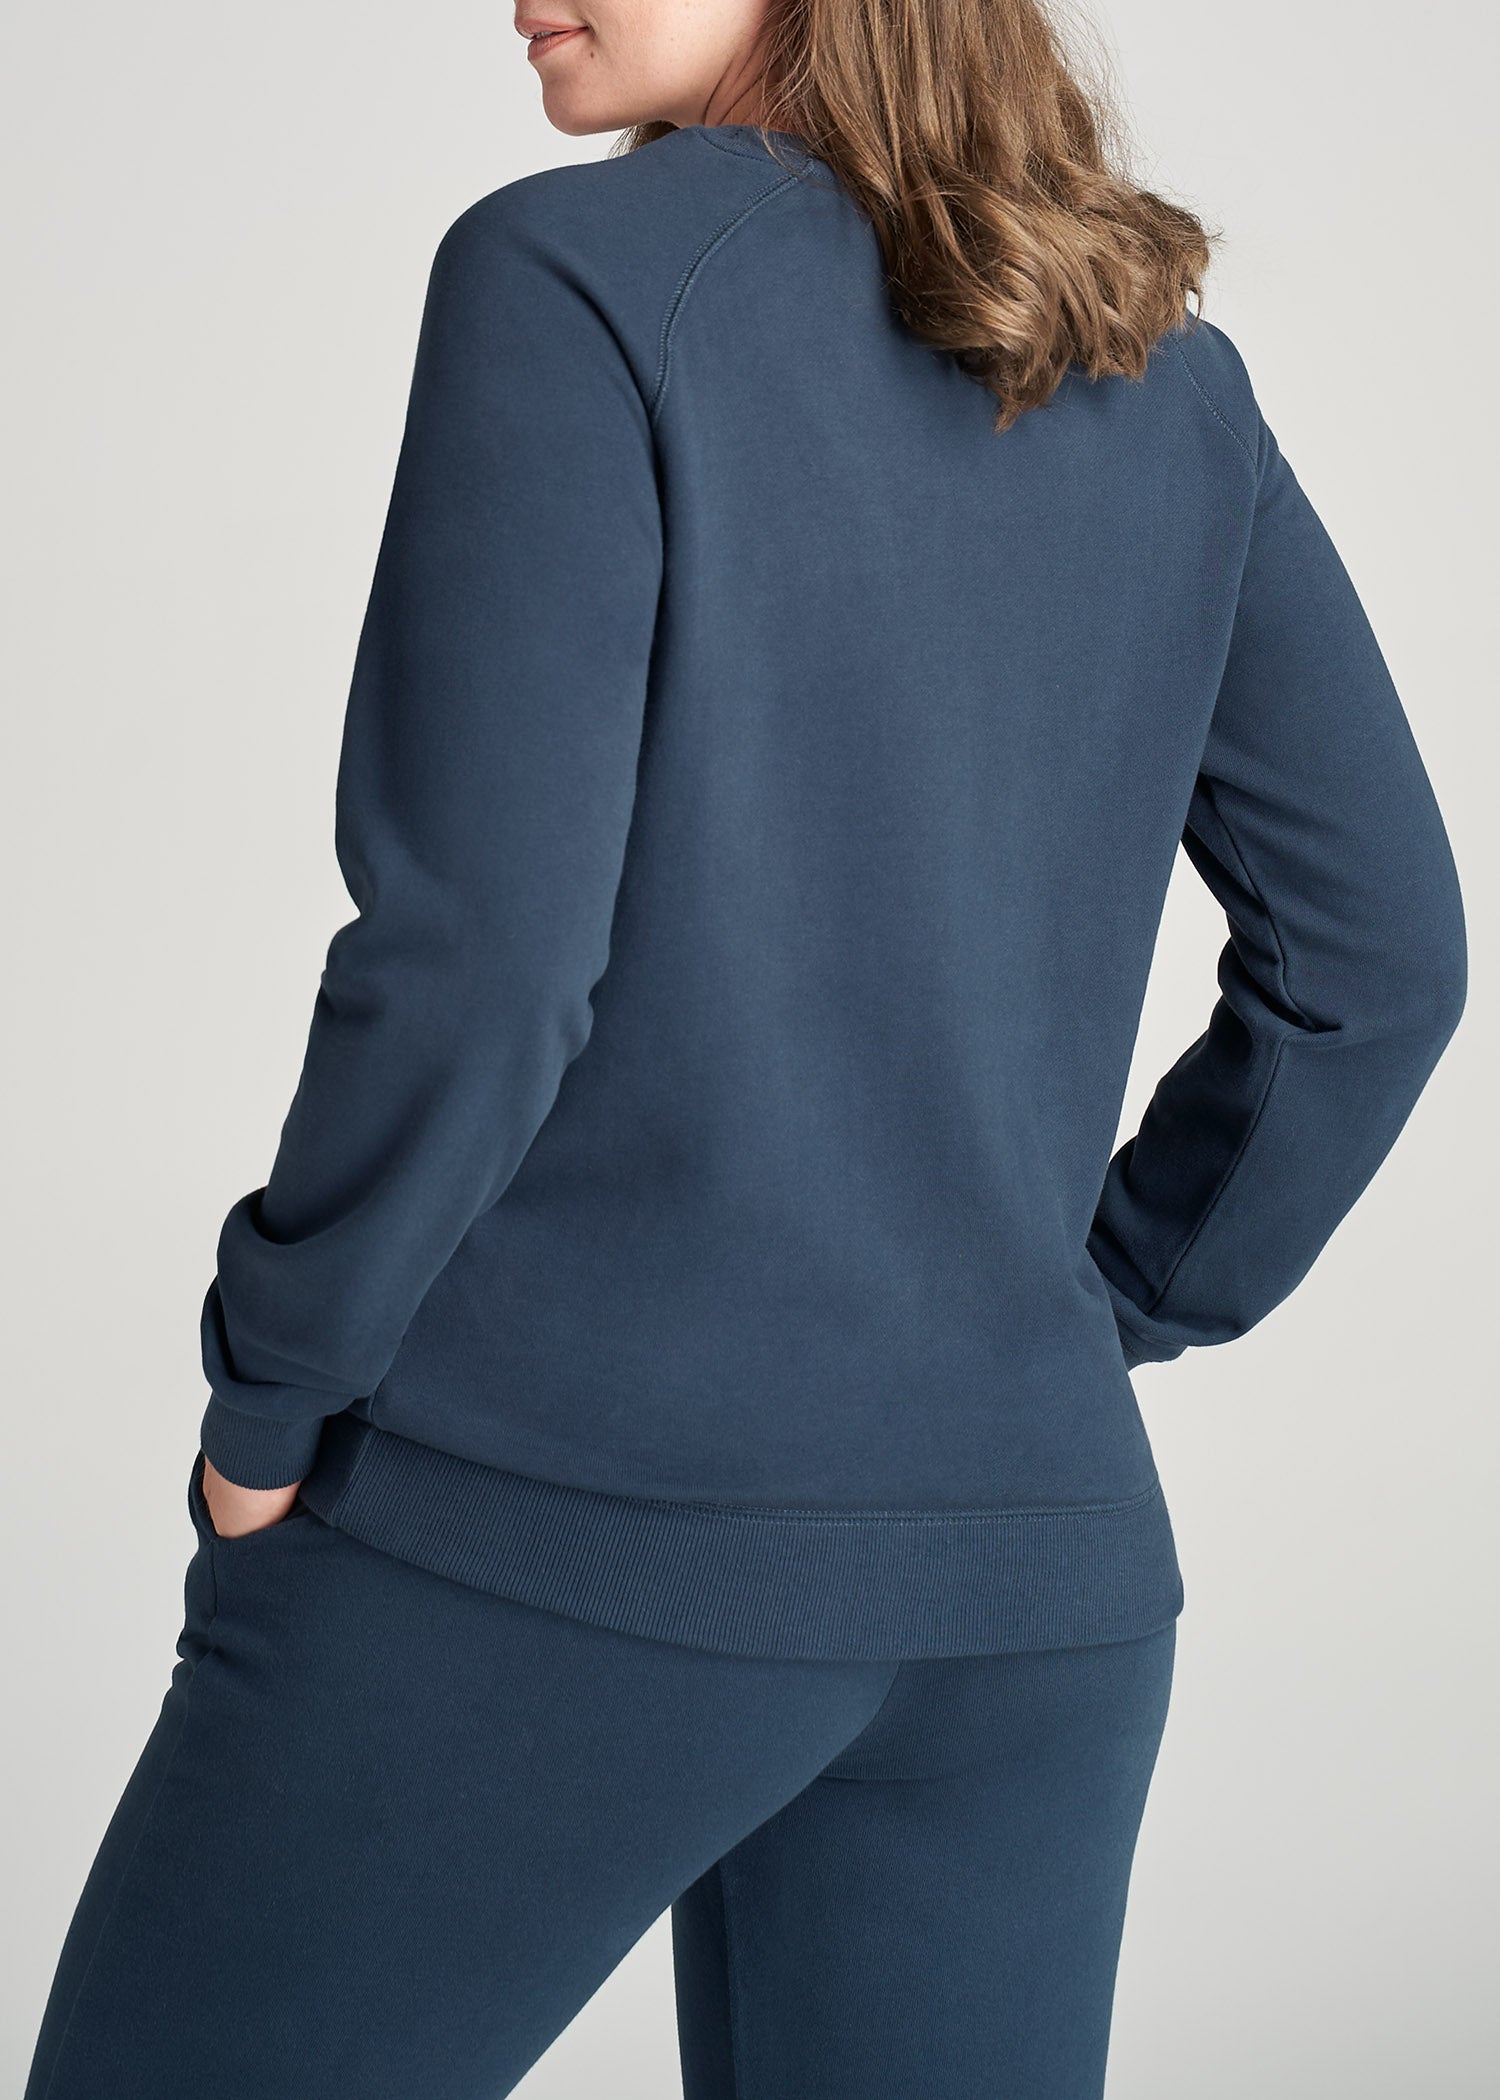 Wearever French Terry Crewneck Women's Tall Sweatshirt